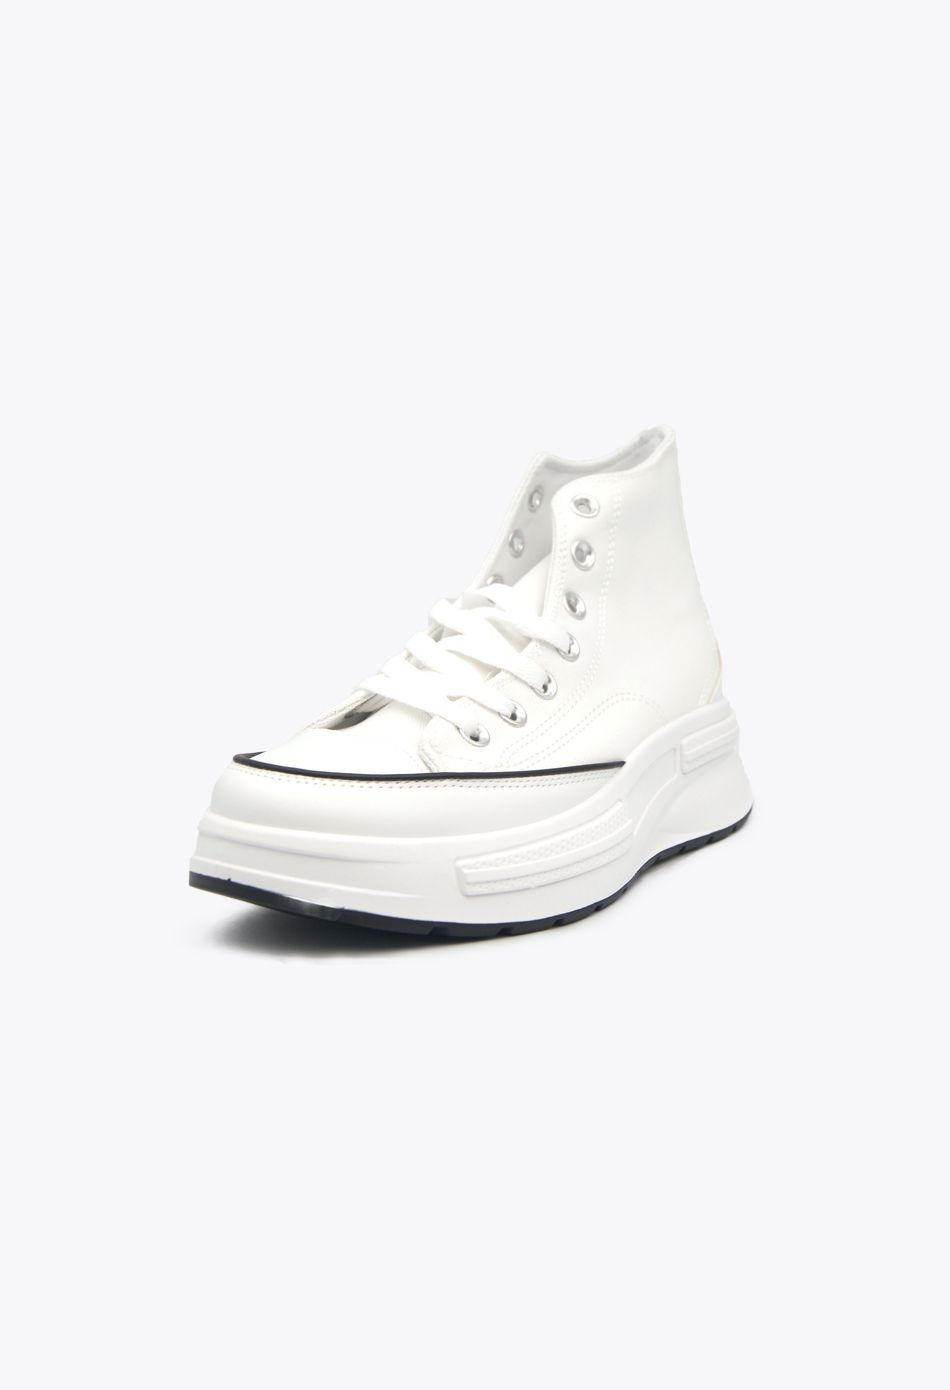 Sneakers Μποτάκια Πάνινα Λευκό / C895-white Γυναικεία Αθλητικά και Sneakers joya.gr